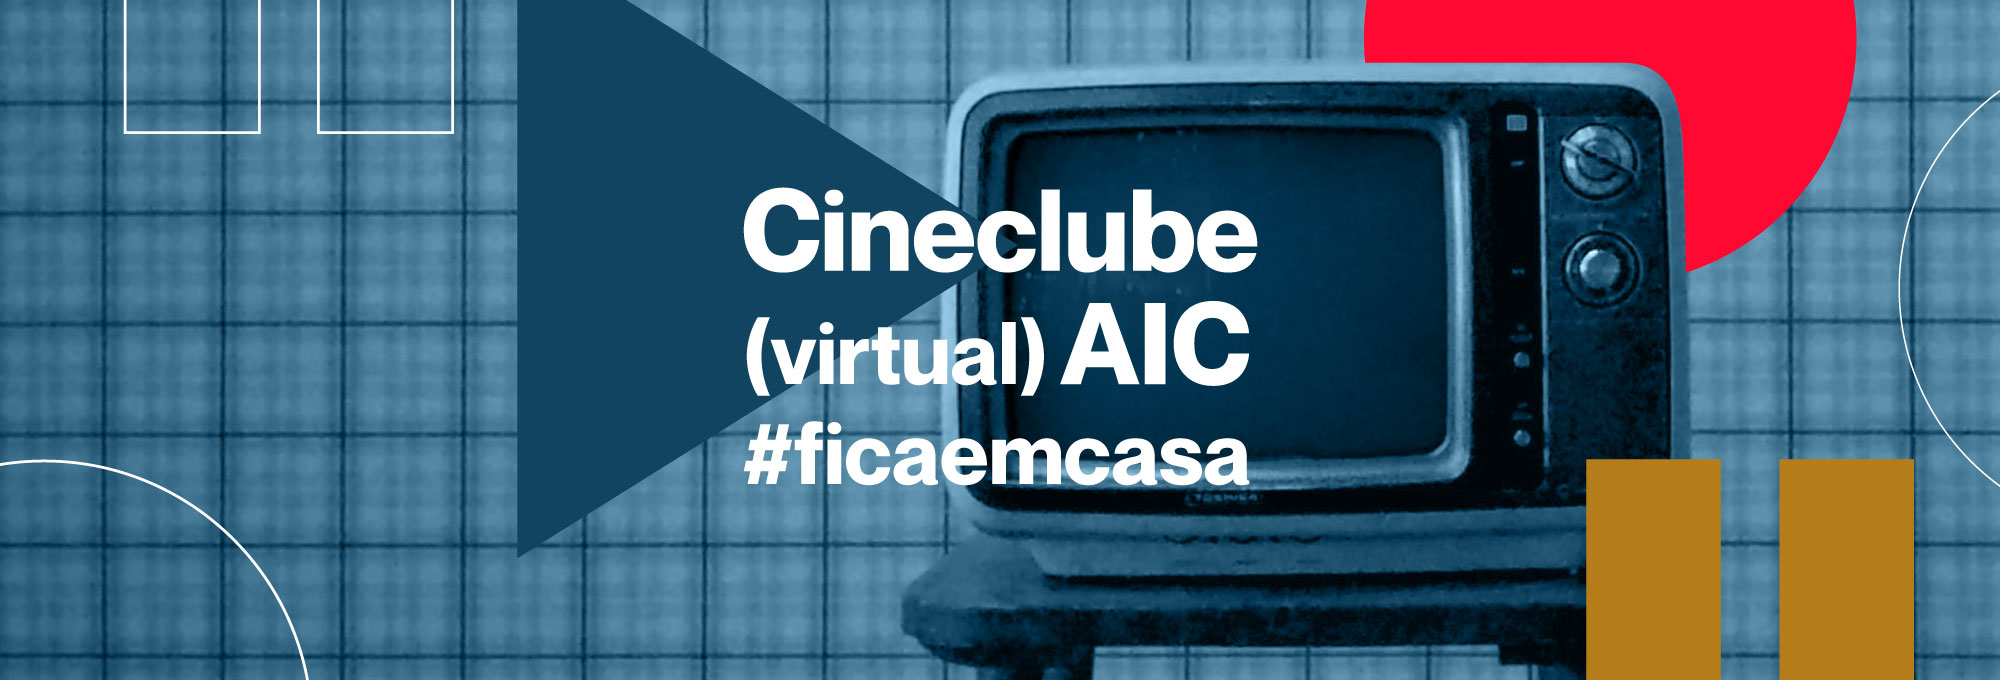 Cineclube #ficaemcasa  recebe a cineasta Gabriela Amaral Almeida